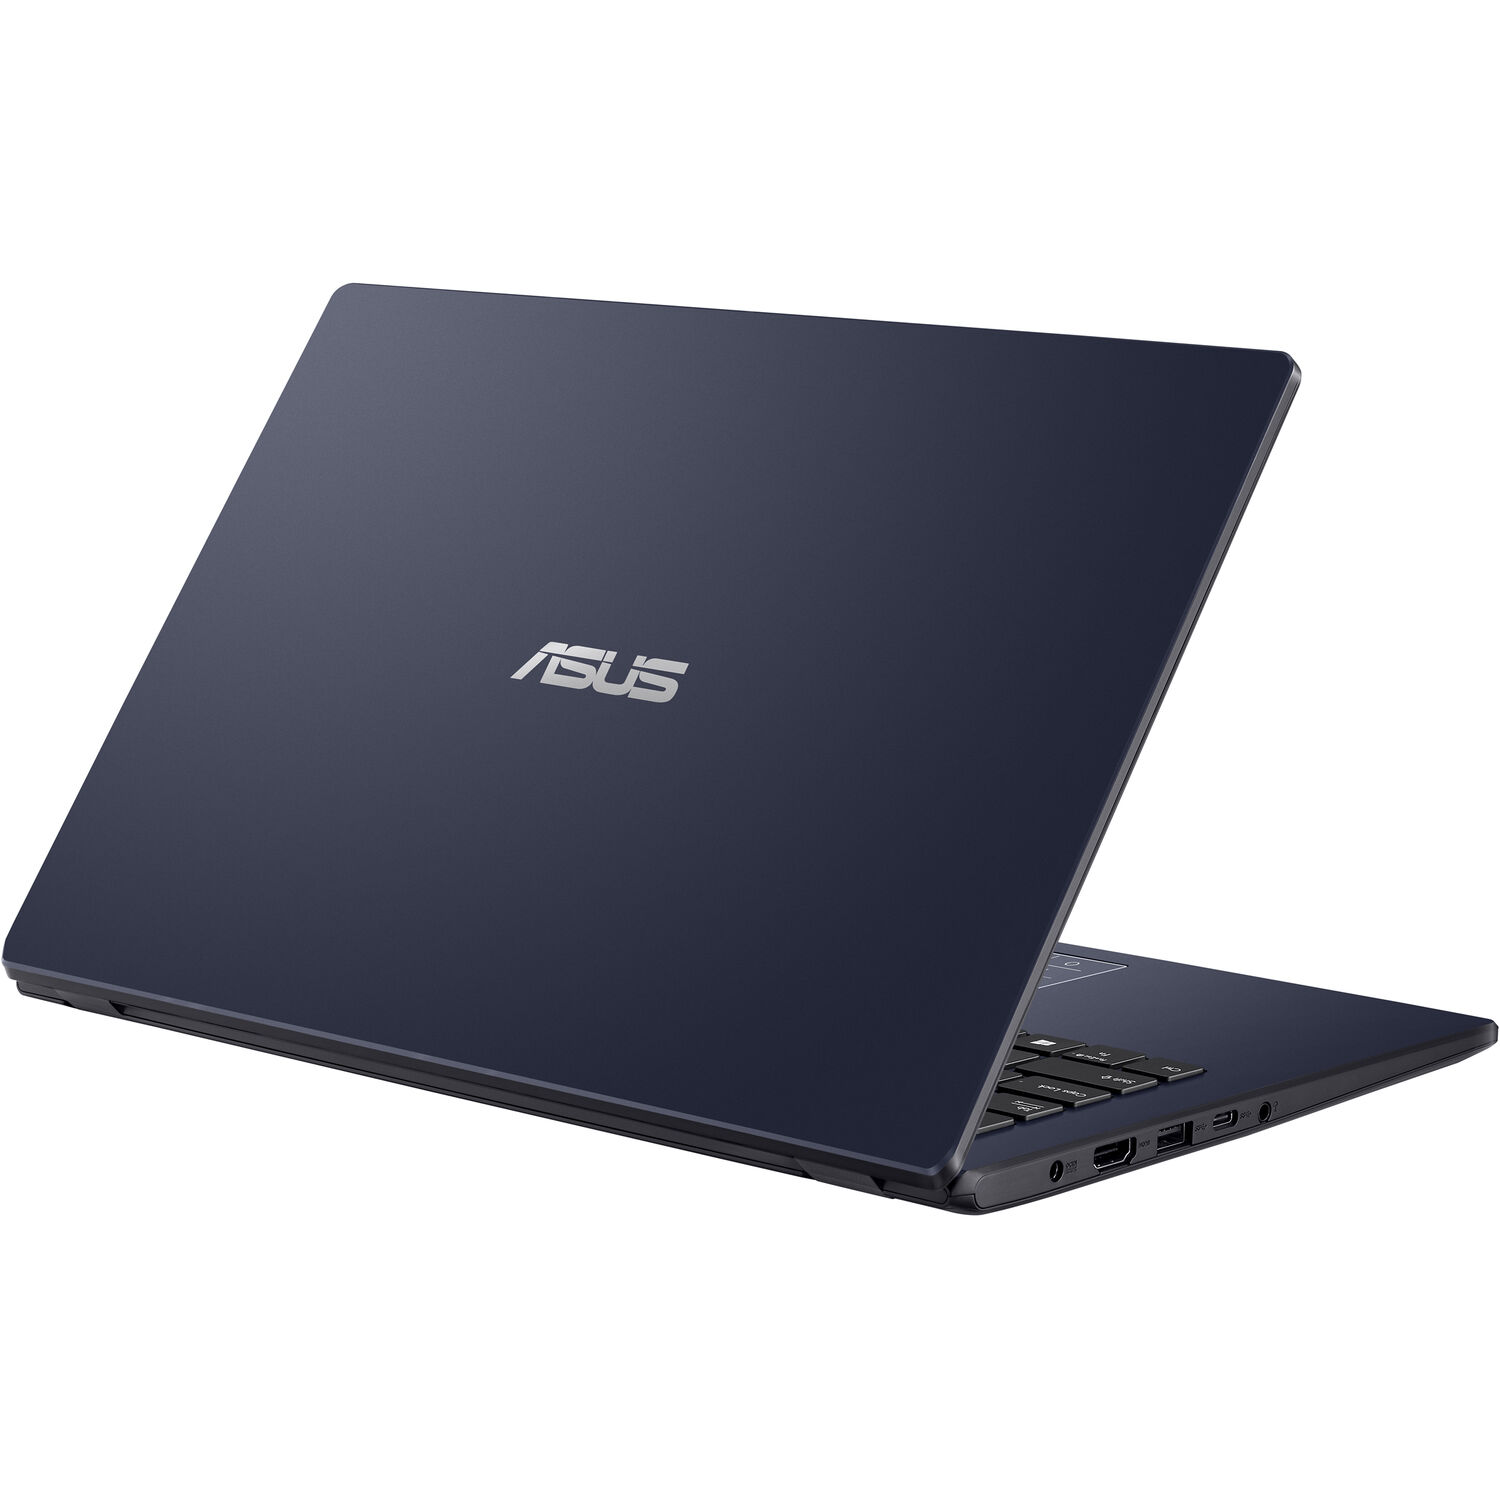 ASUS 14 L410 Everyday Value Laptop (Intel Celeron N4020 2-Core, 4GB RAM, 128GB PCIe SSD, 14.0" Full HD (1920x1080), Intel UHD 600, Wifi, Bluetooth, Webcam, 1xUSB 3.2, 1xHDMI, Win 10 Home) - image 5 of 6